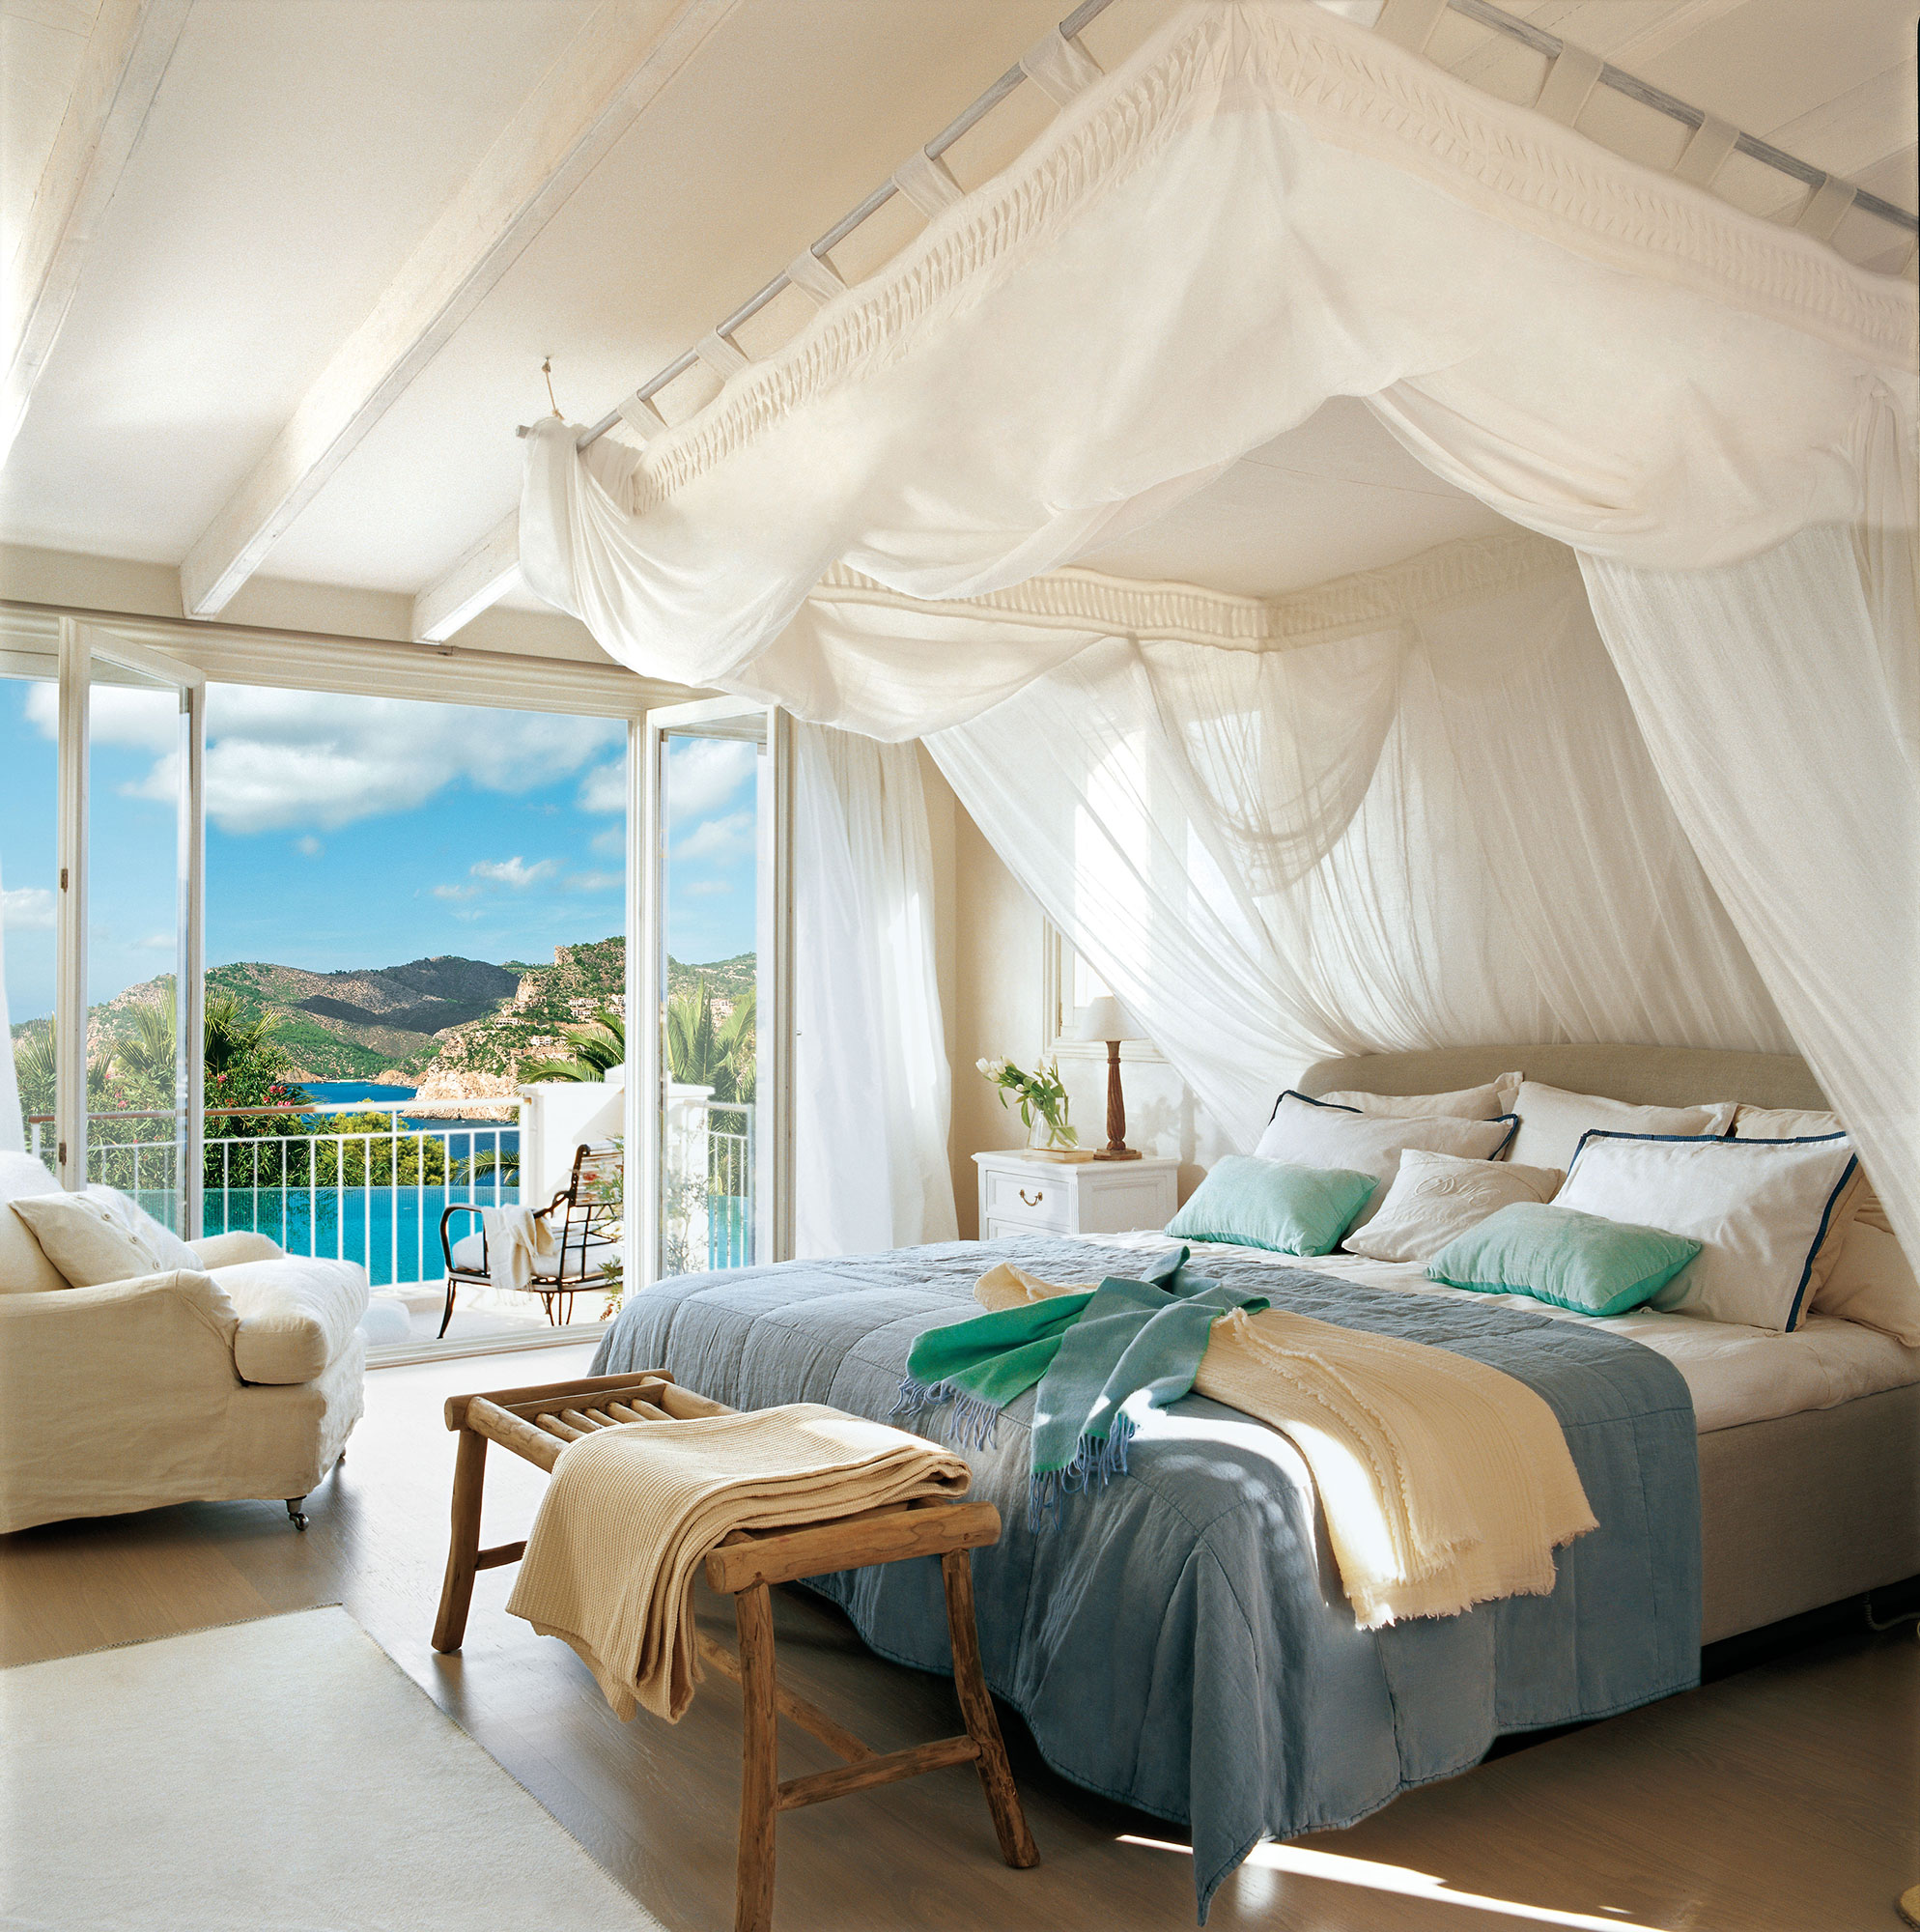 Dormitorio con dosel con cortinas.  